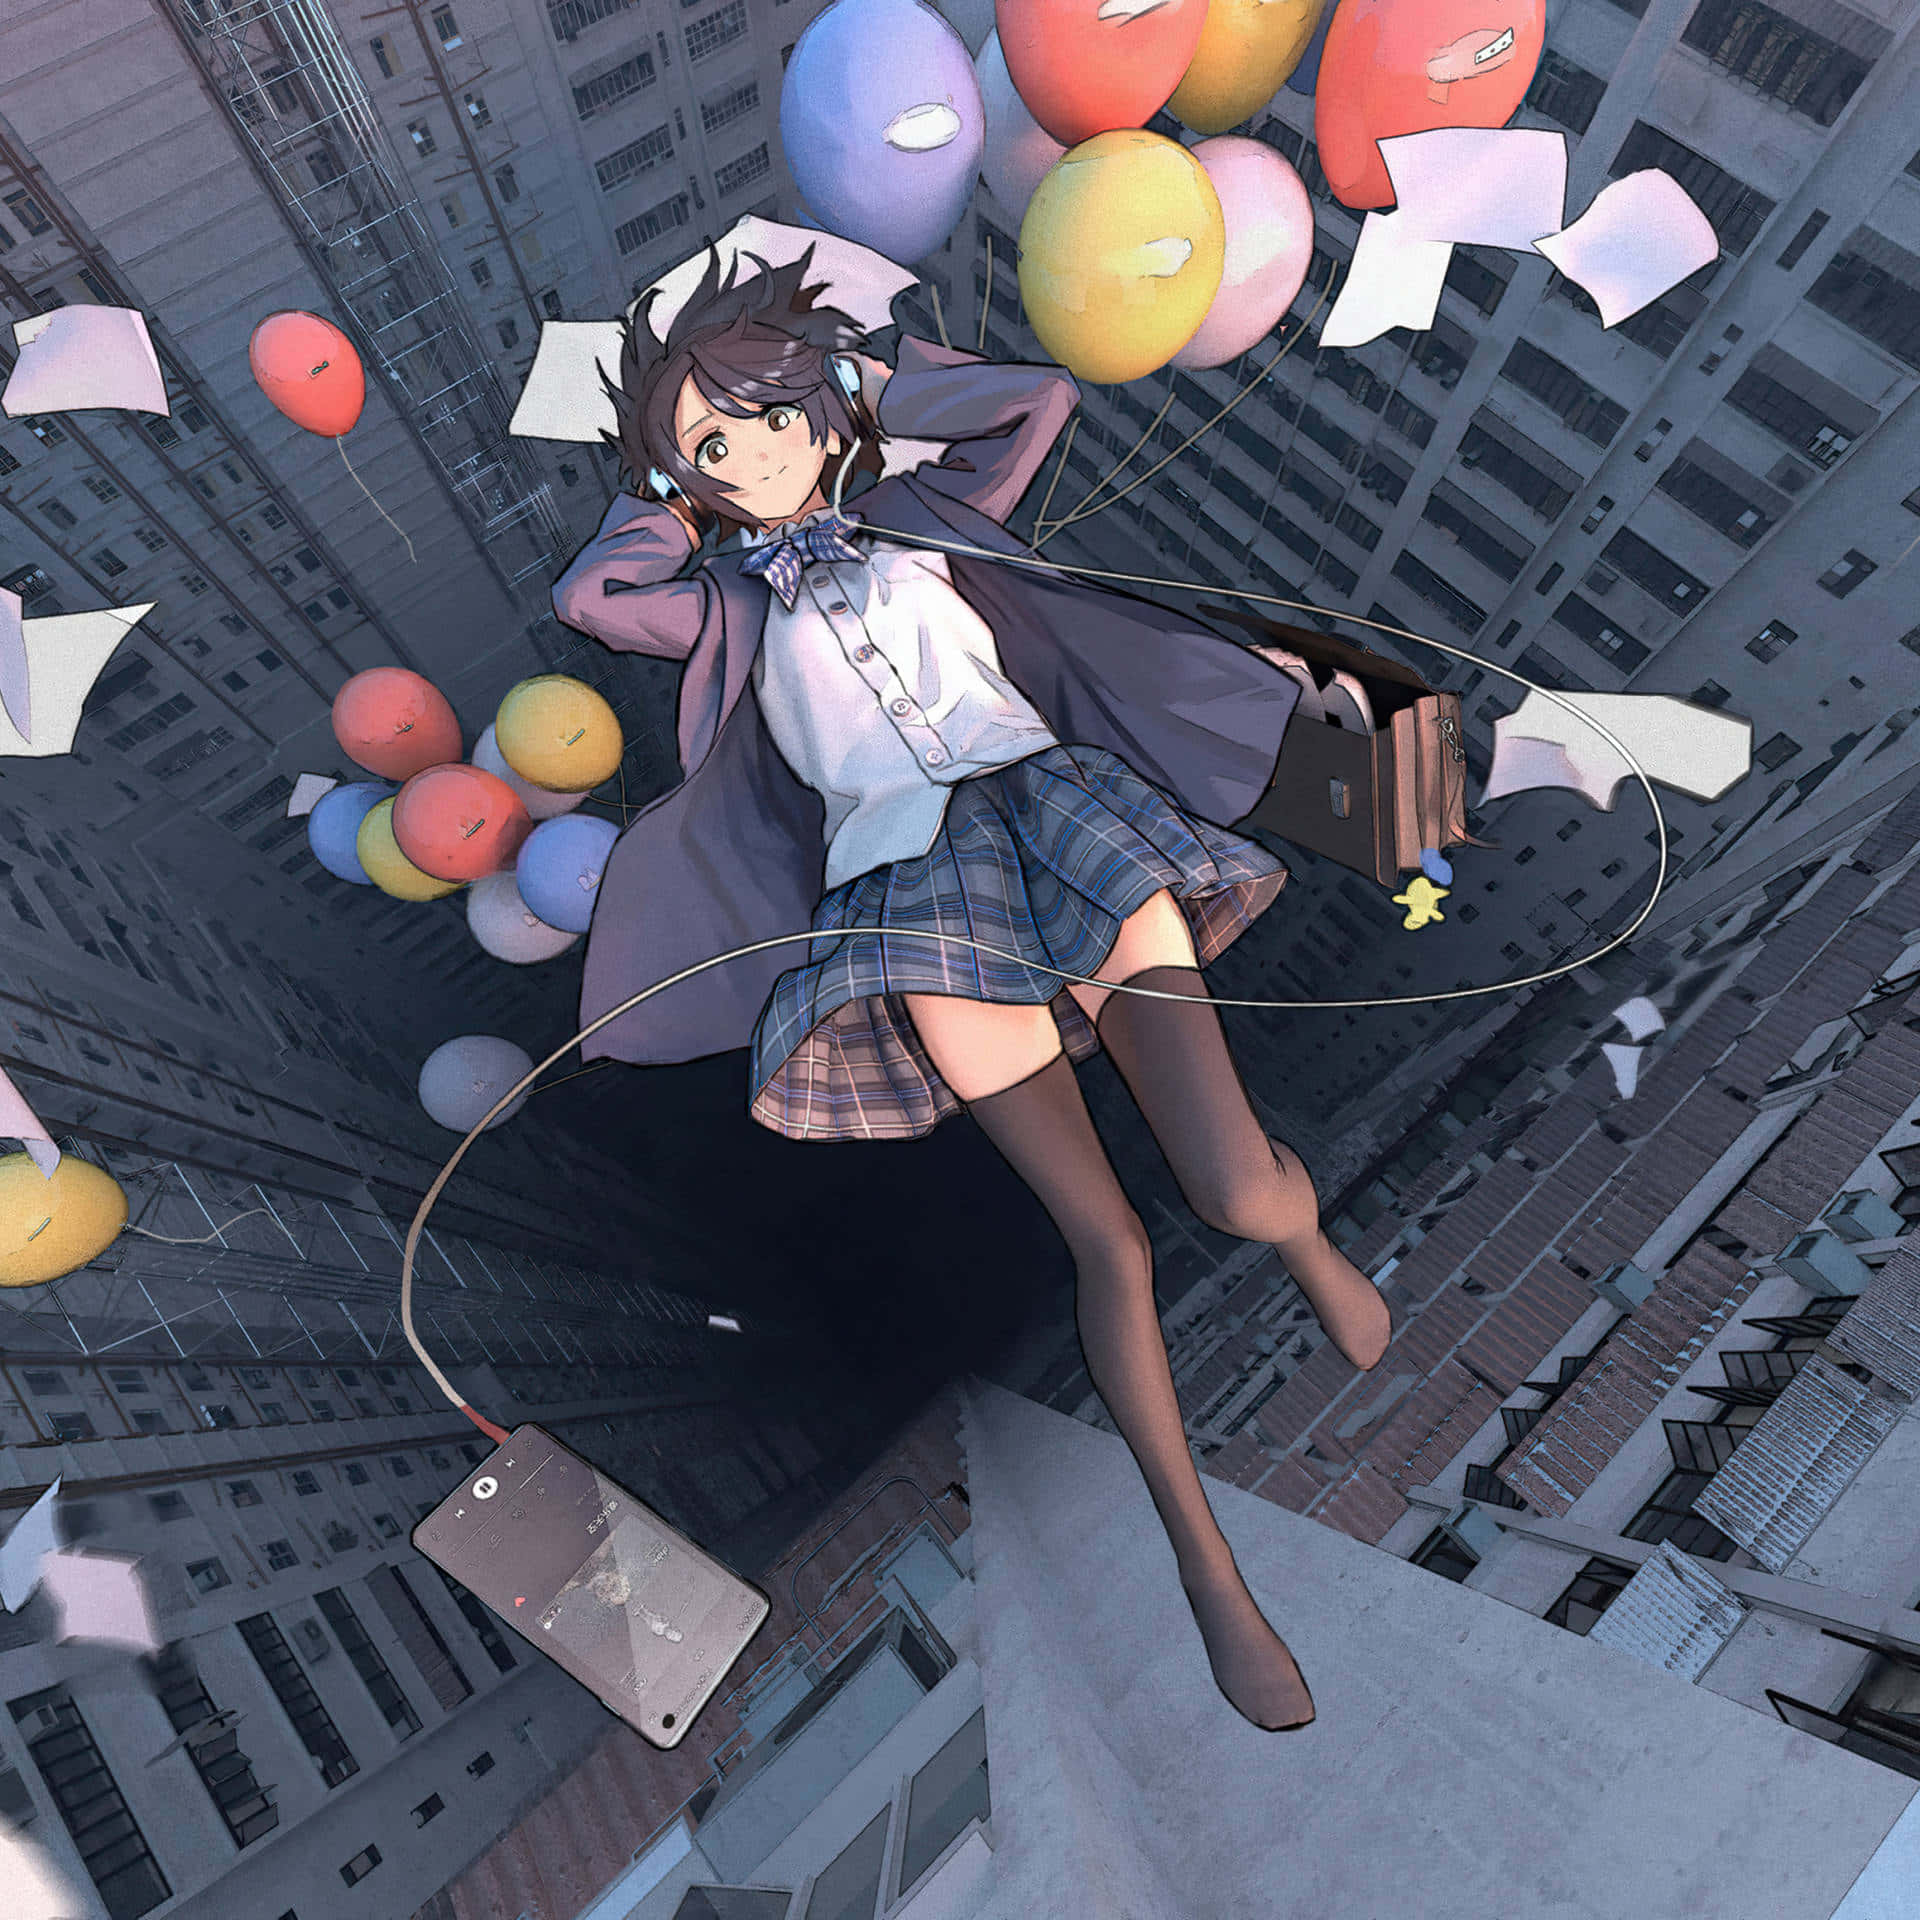 Ipad Anime Girl Balloons Picture